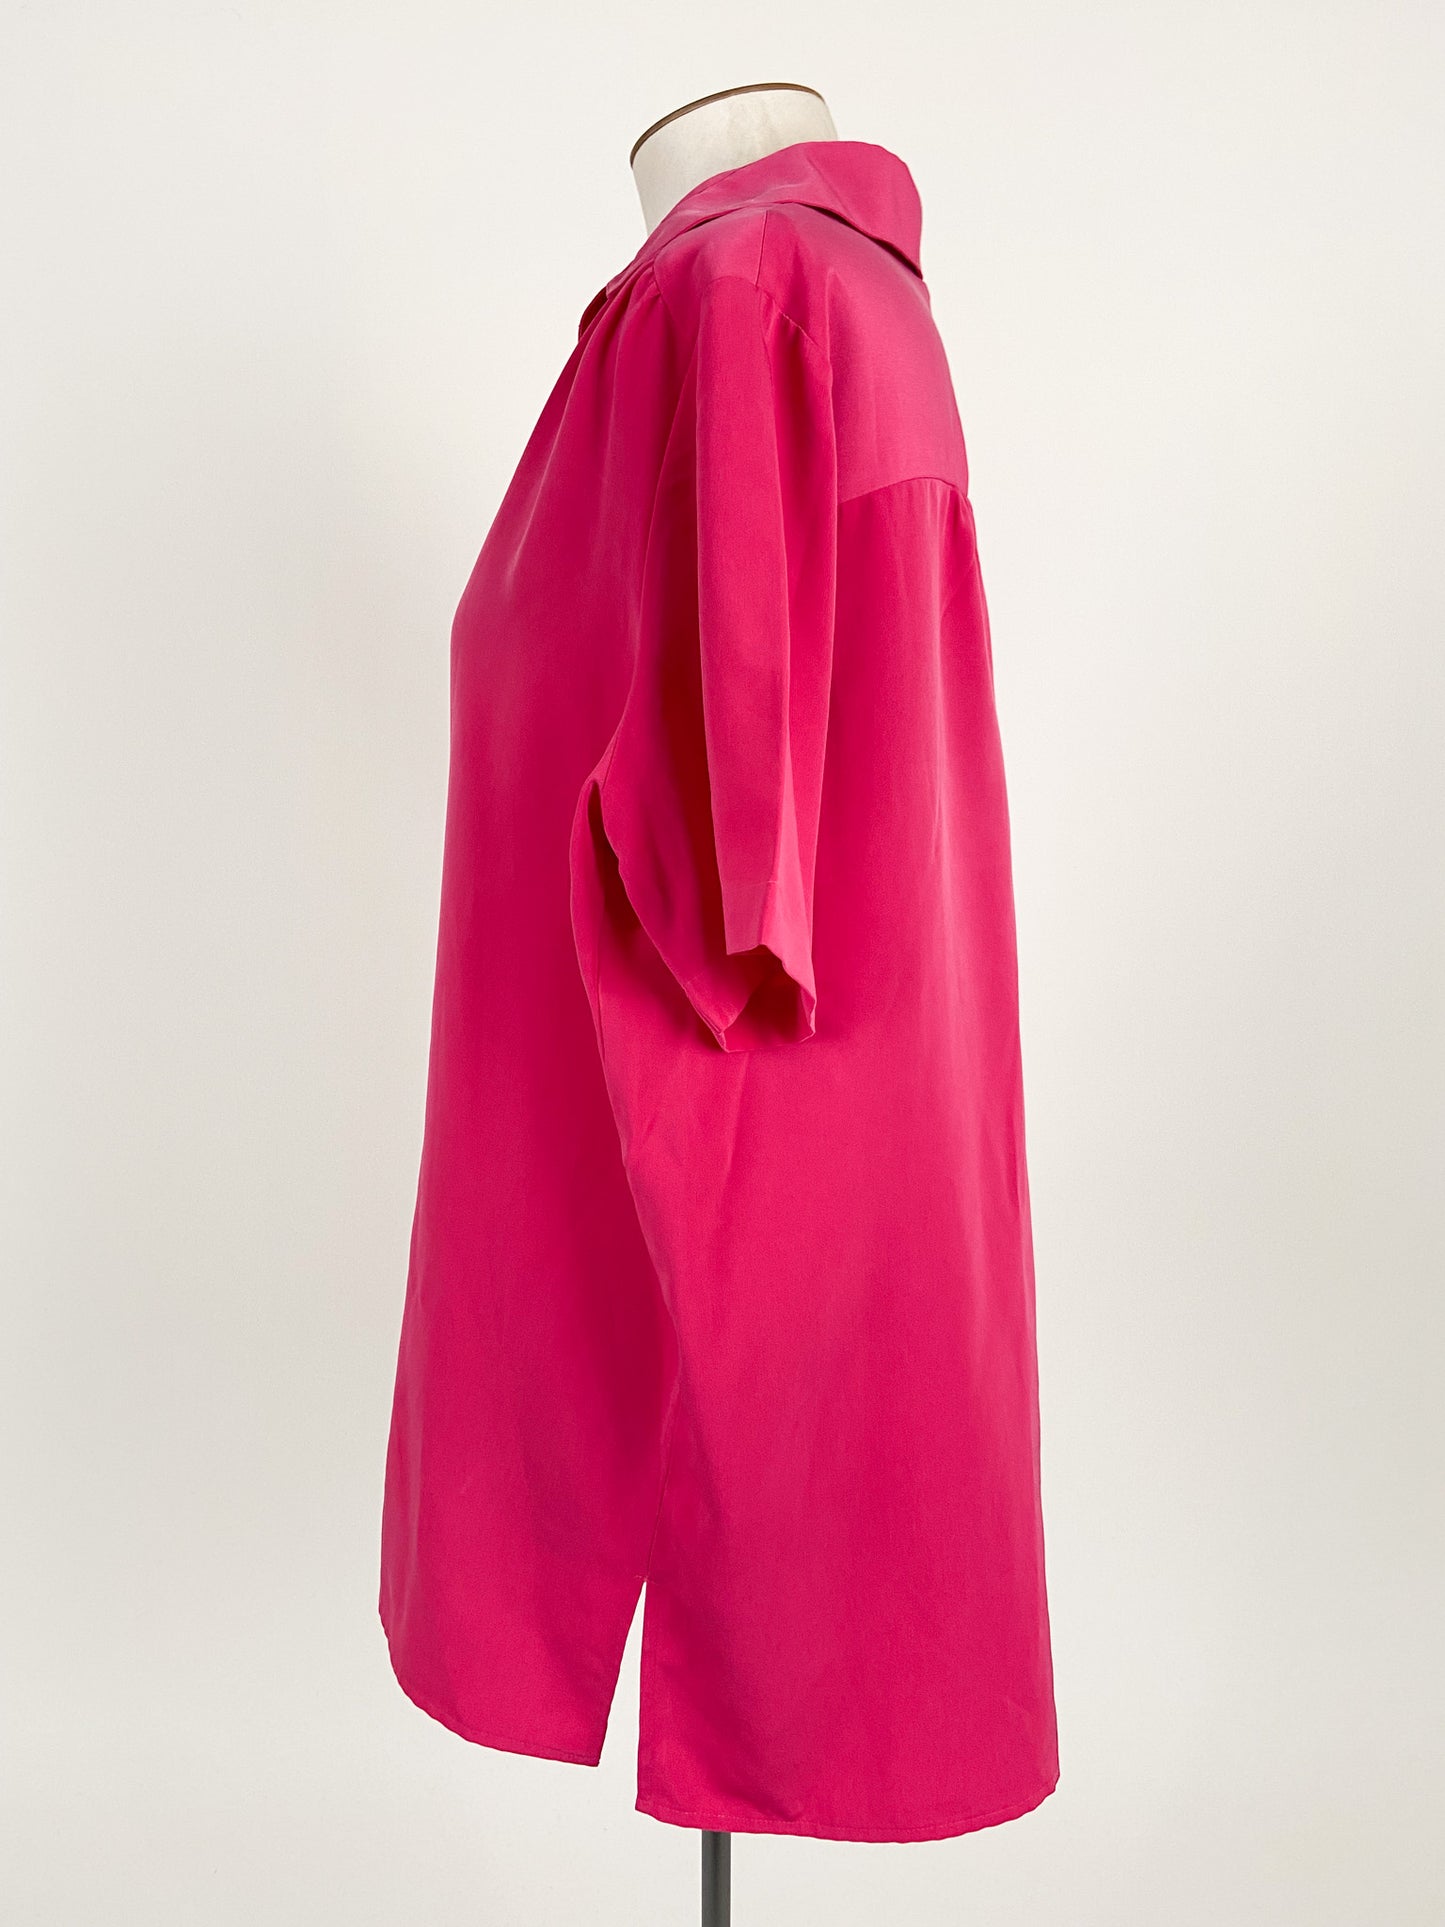 Sue Brett | Pink Casual/Workwear Top | Size L